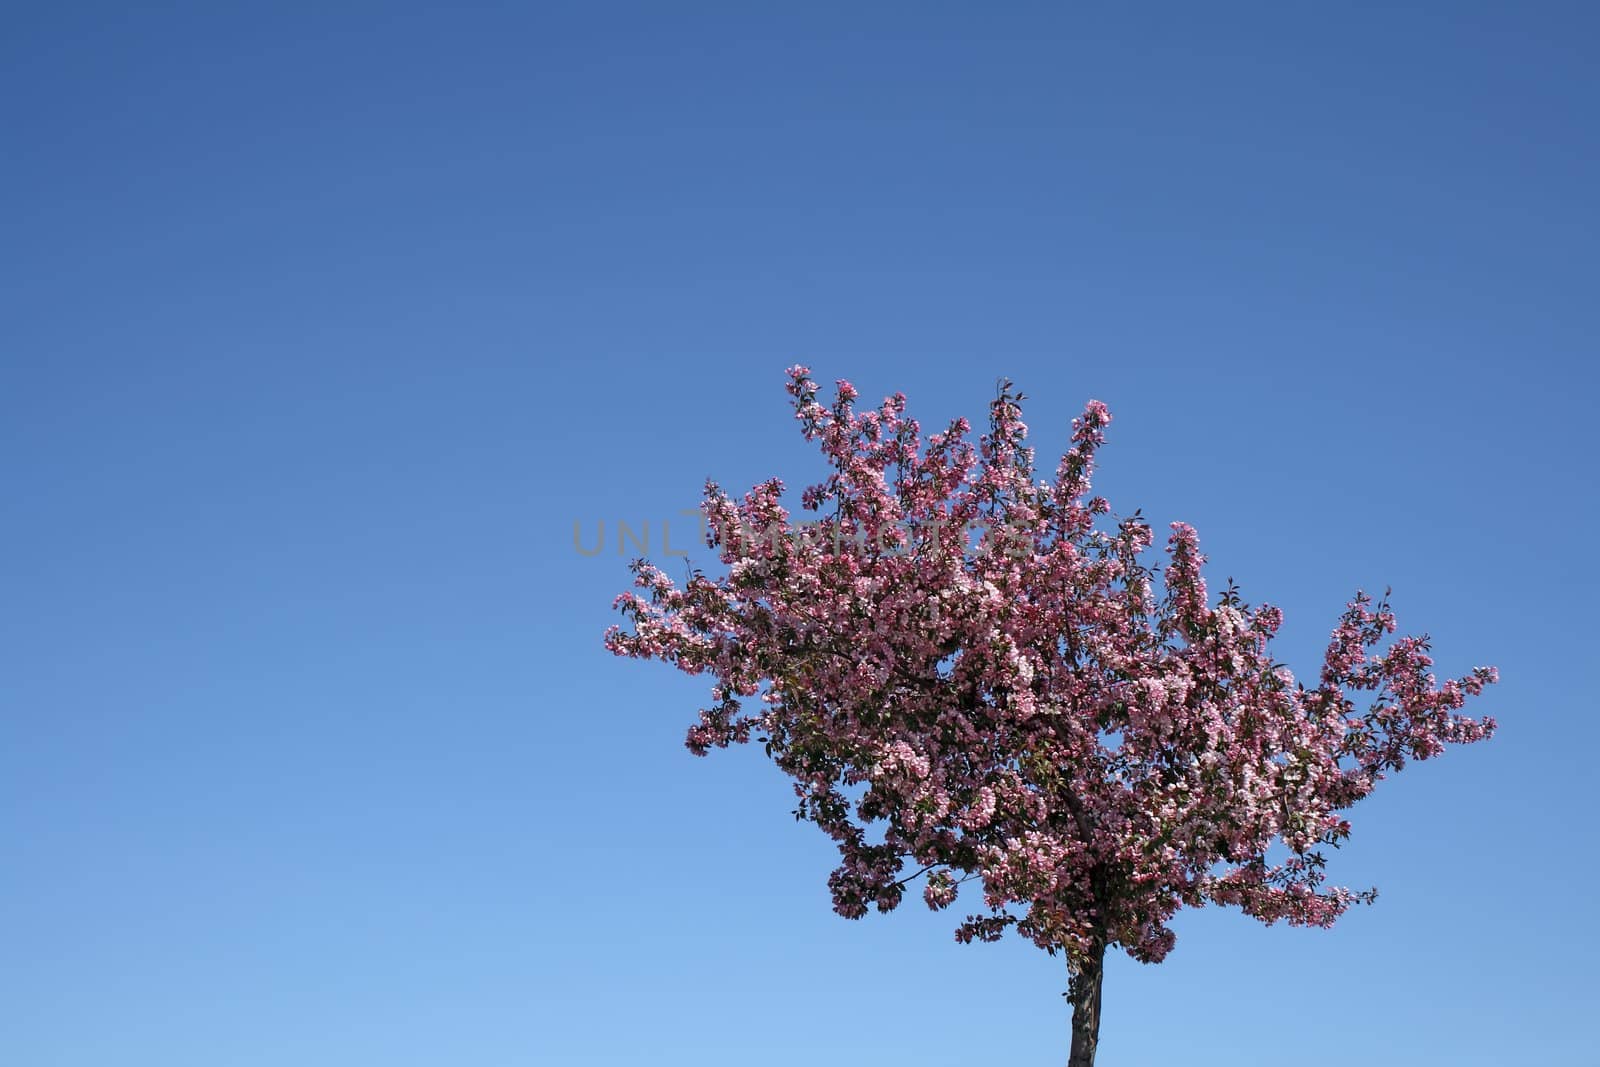 Blooming plum tree and blue sky by anikasalsera